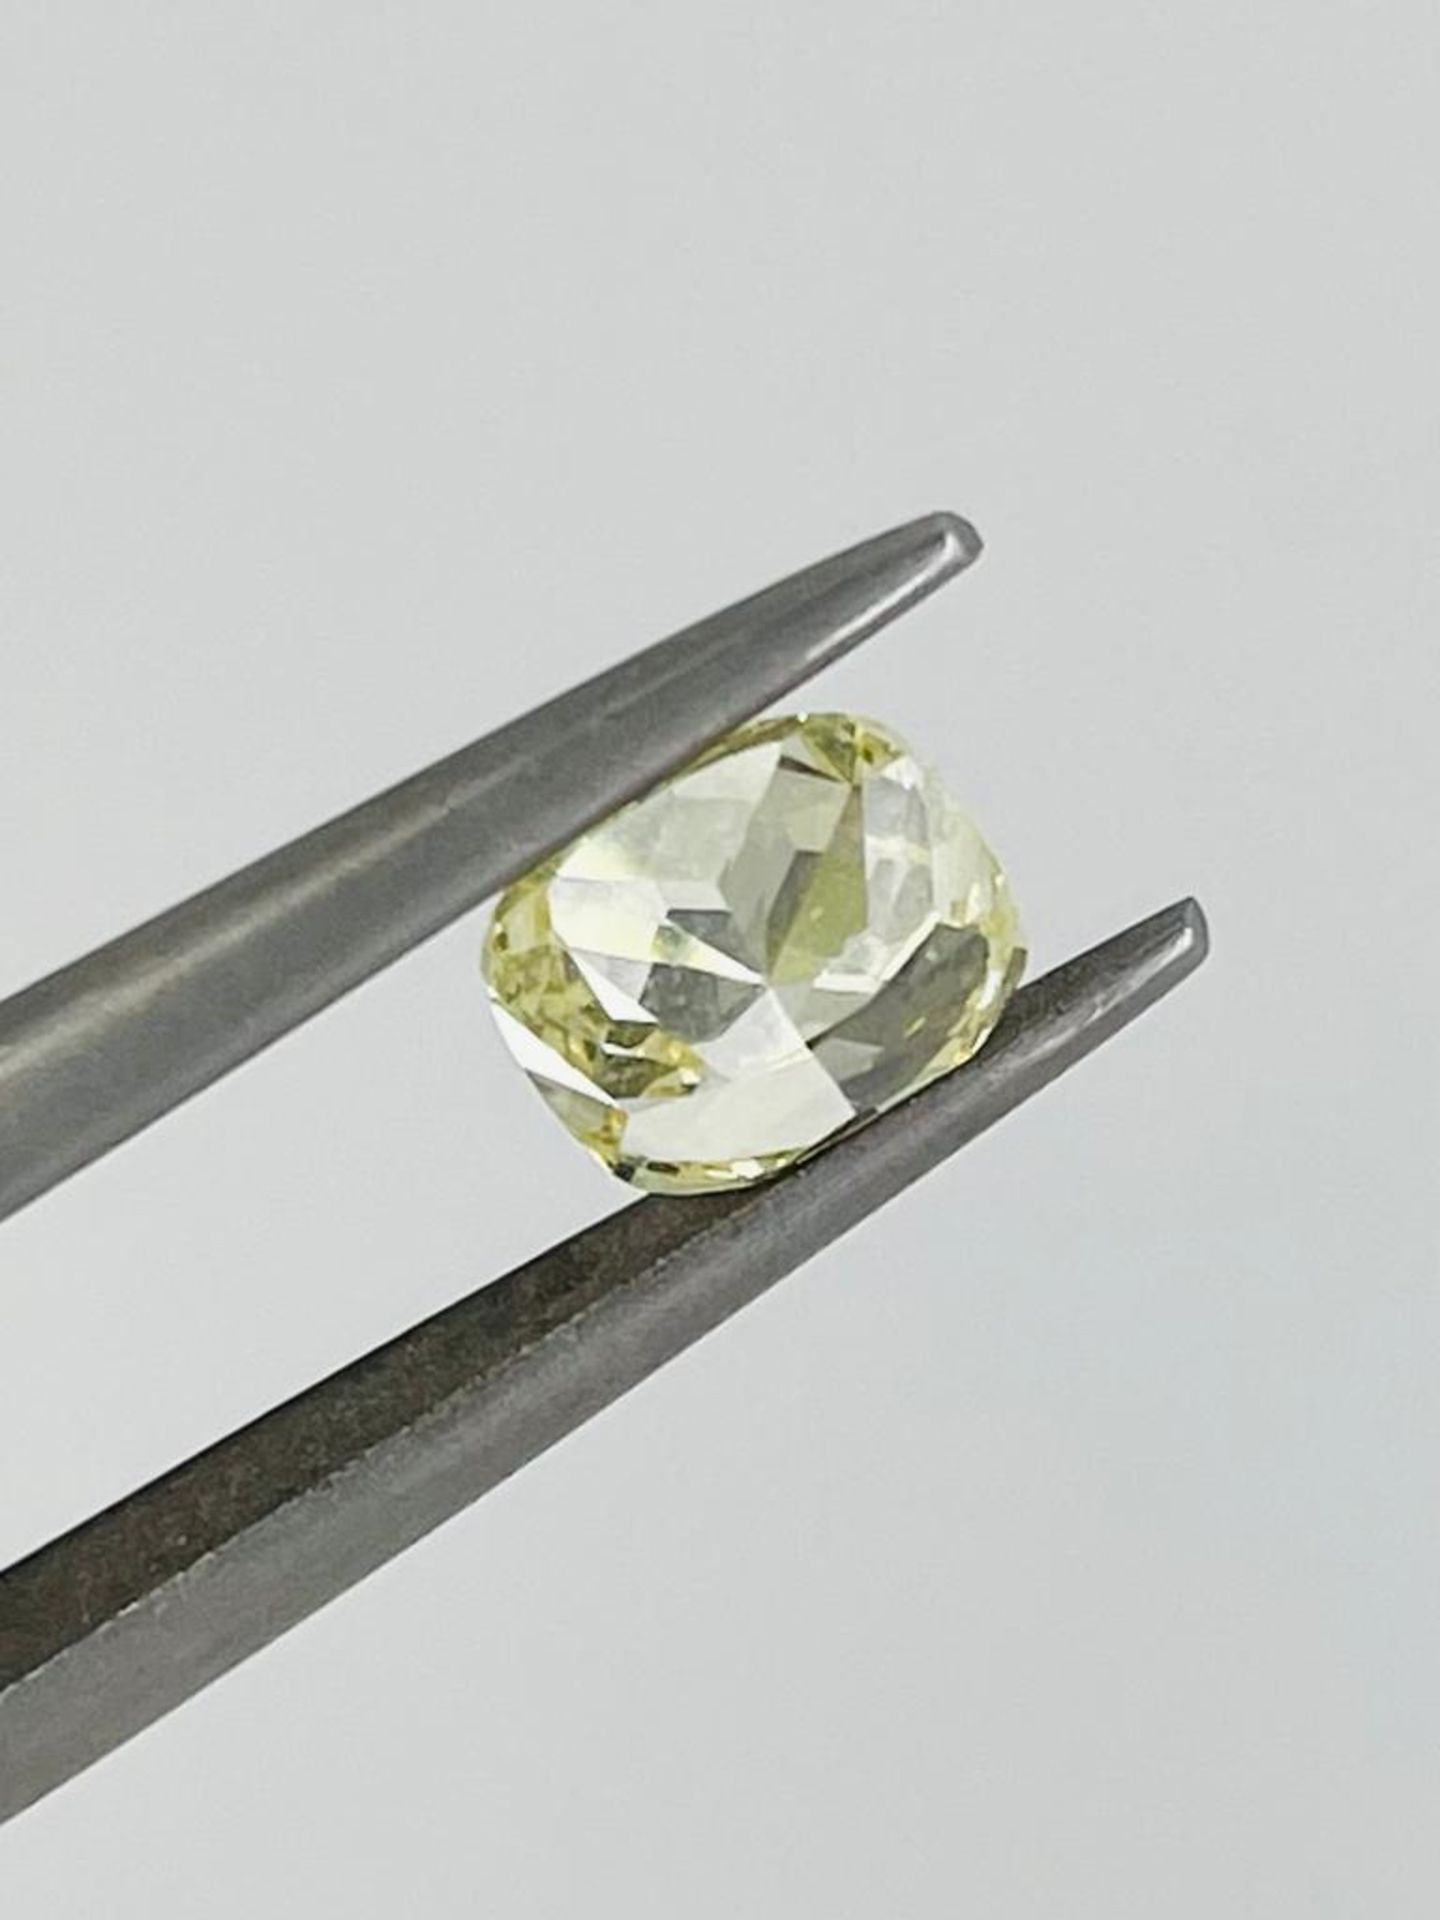 1 DIAMOND 1,05 CT N.F.YELLOW EVEN - VS2 - SHAPE CUSHION - CERTIFICATION GIA - AM20716 - Image 3 of 5